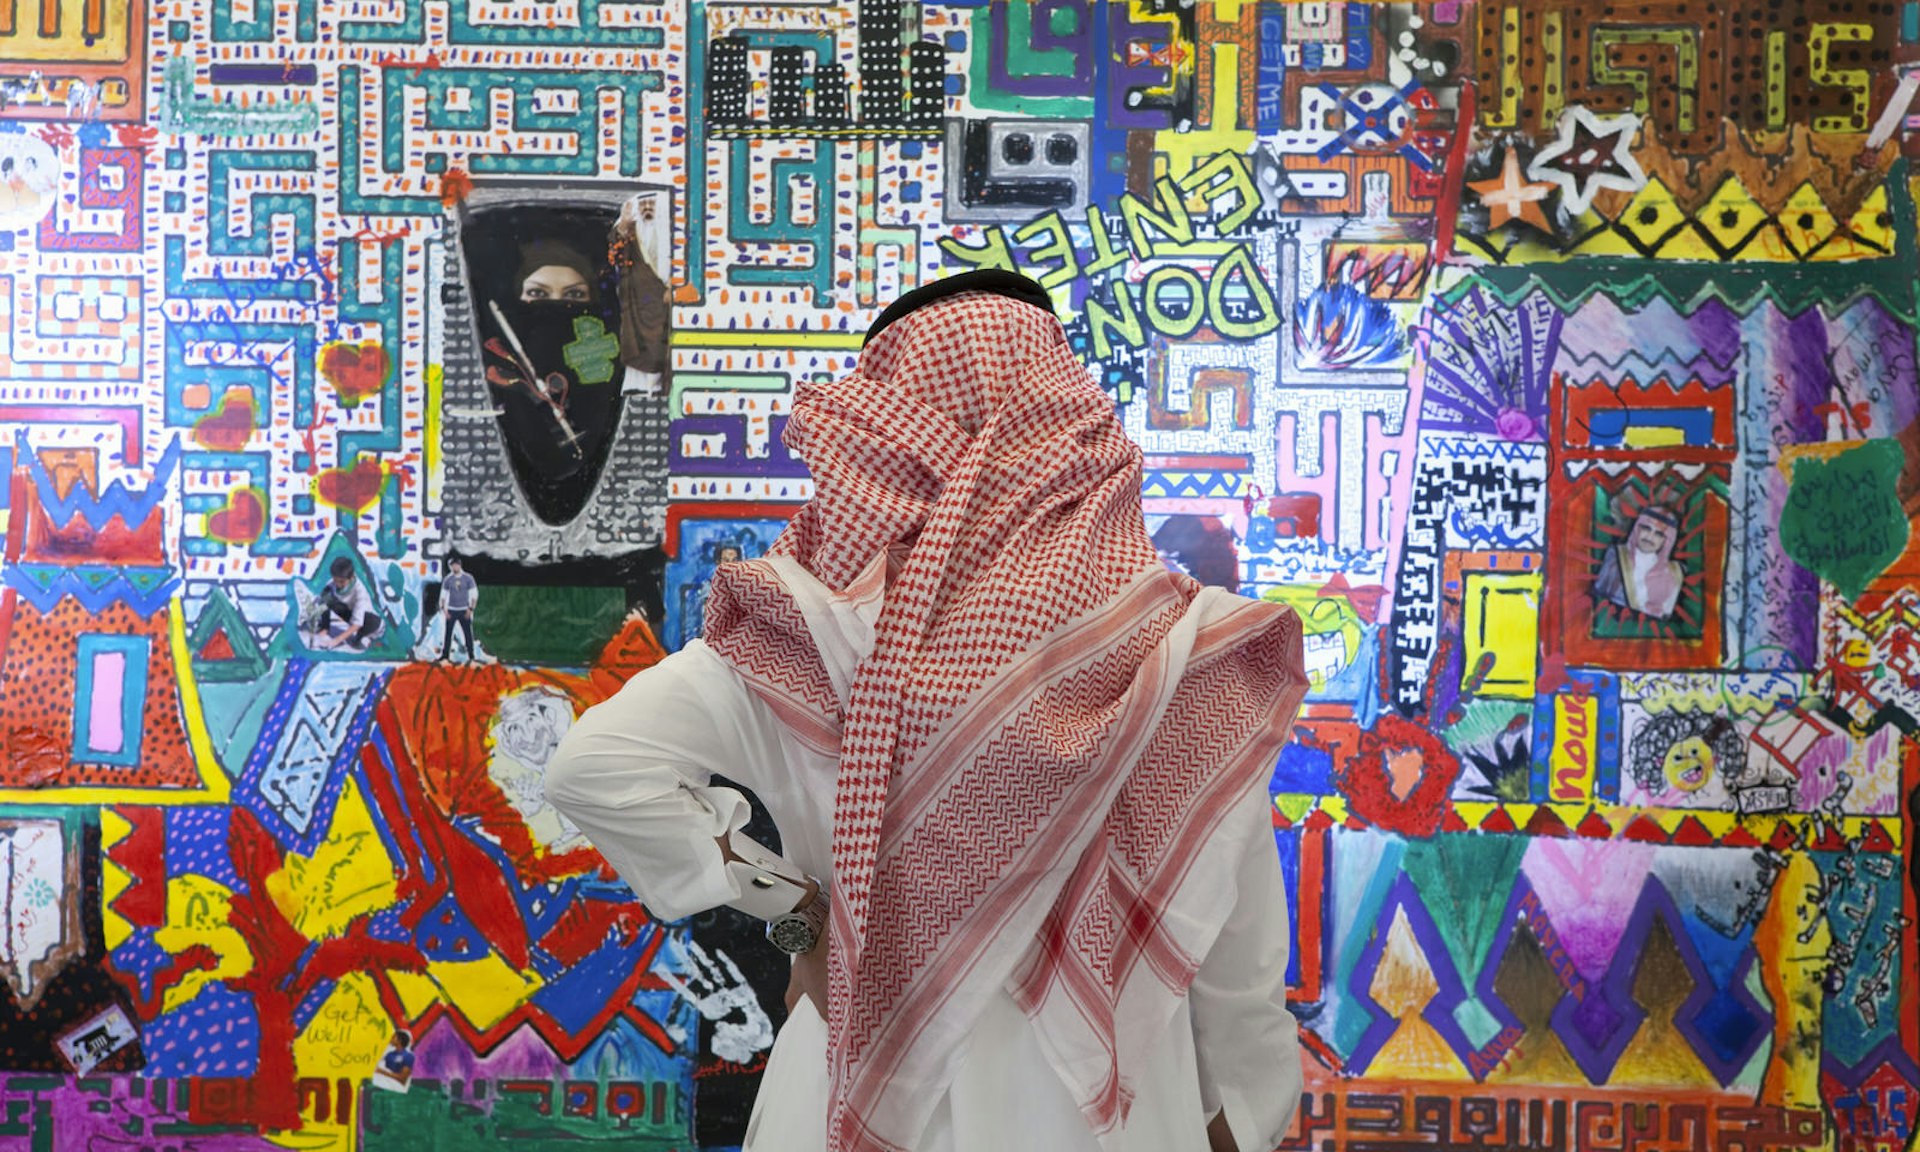 Saudi man looks at art at a children's art show at the Kingdom Tower in Riyadh, Saudi Arabia